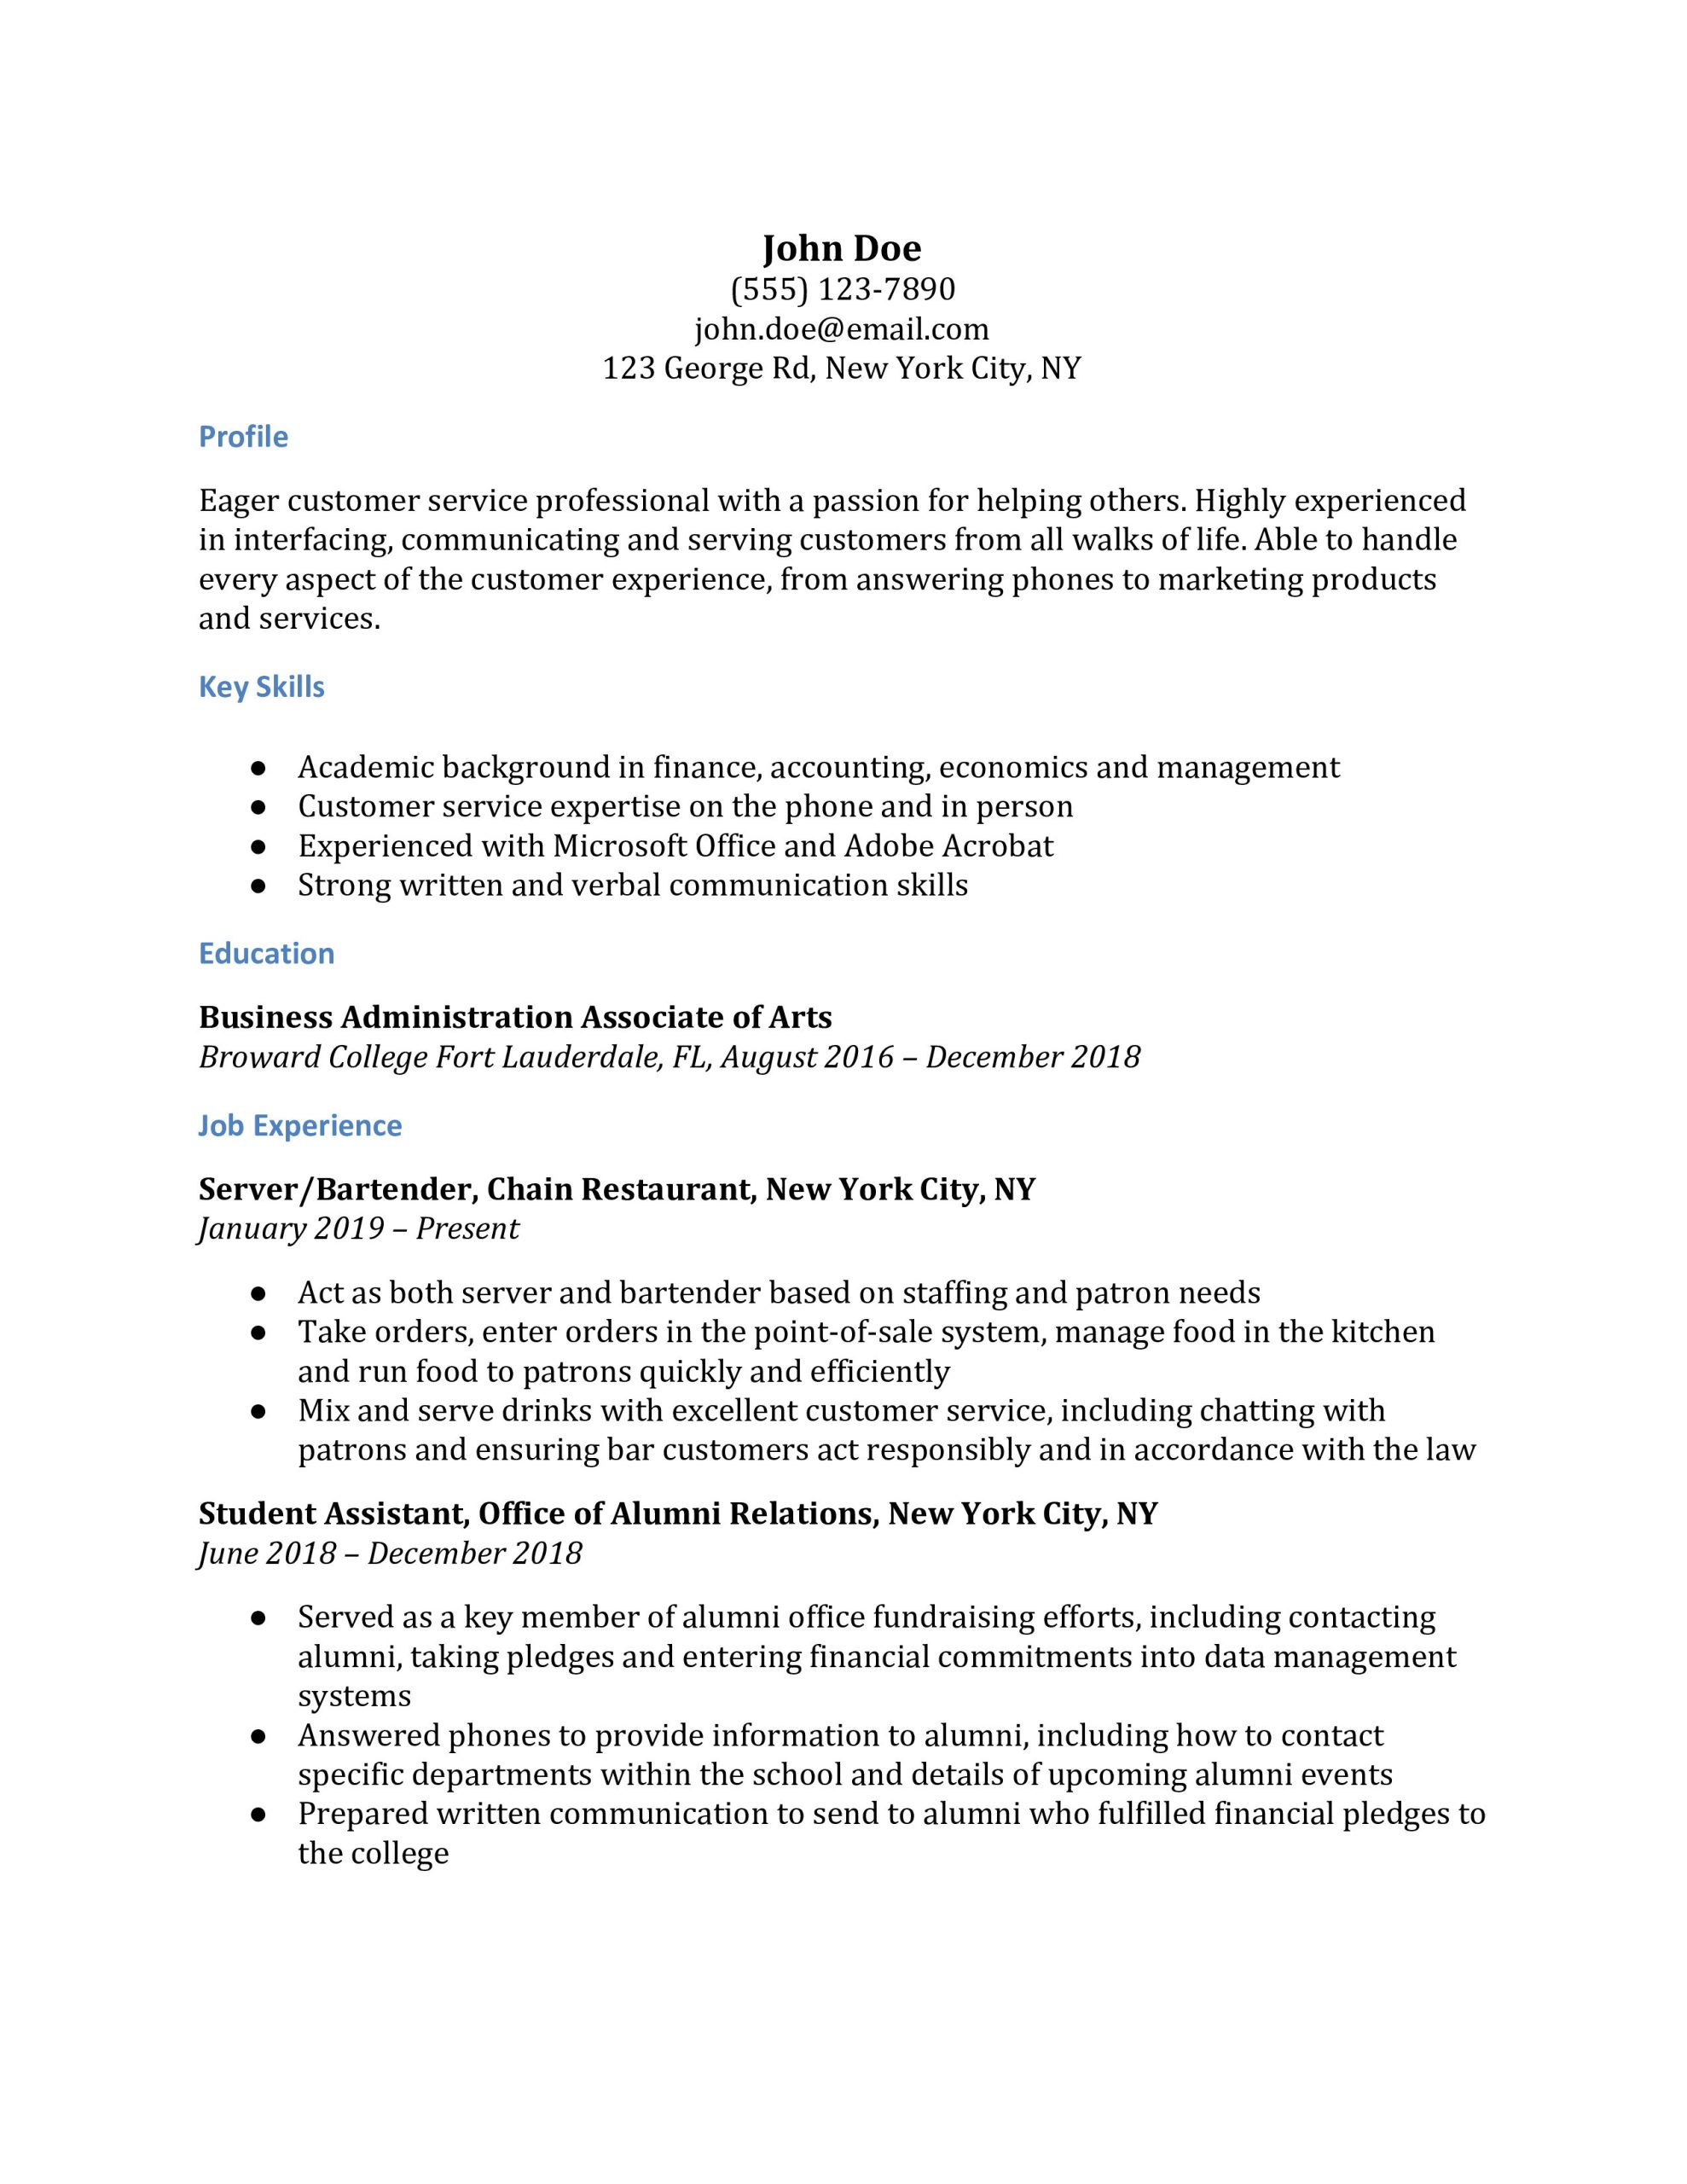 Sample Resume for Administrative assistant Entry Level Administrative assistant Resume Examples Resumebuilder.com